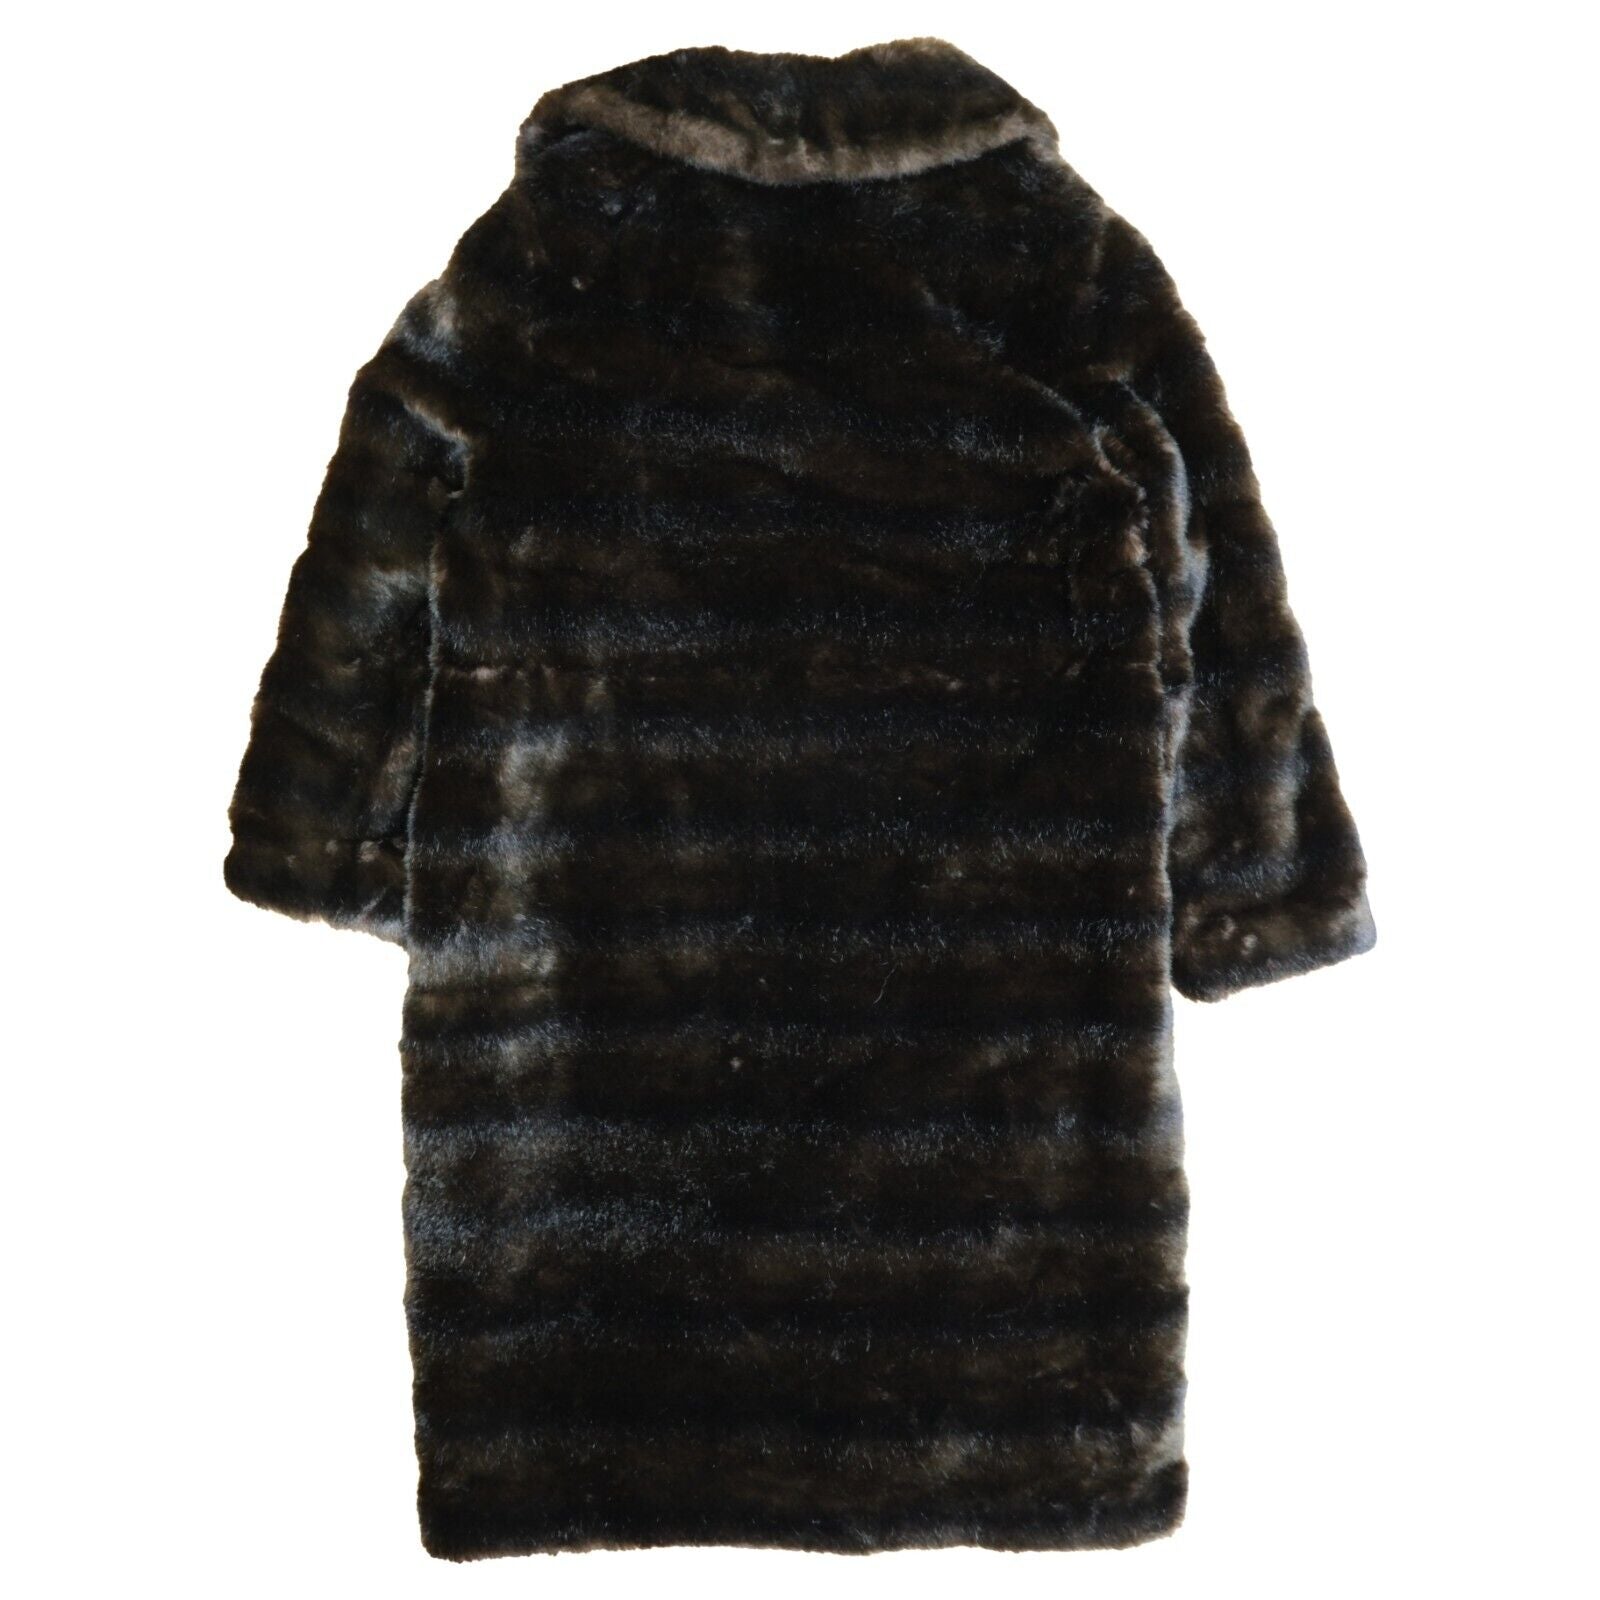 Vintage Tissavel France Faux Fur Coat Jacket Womens Size Medium ...